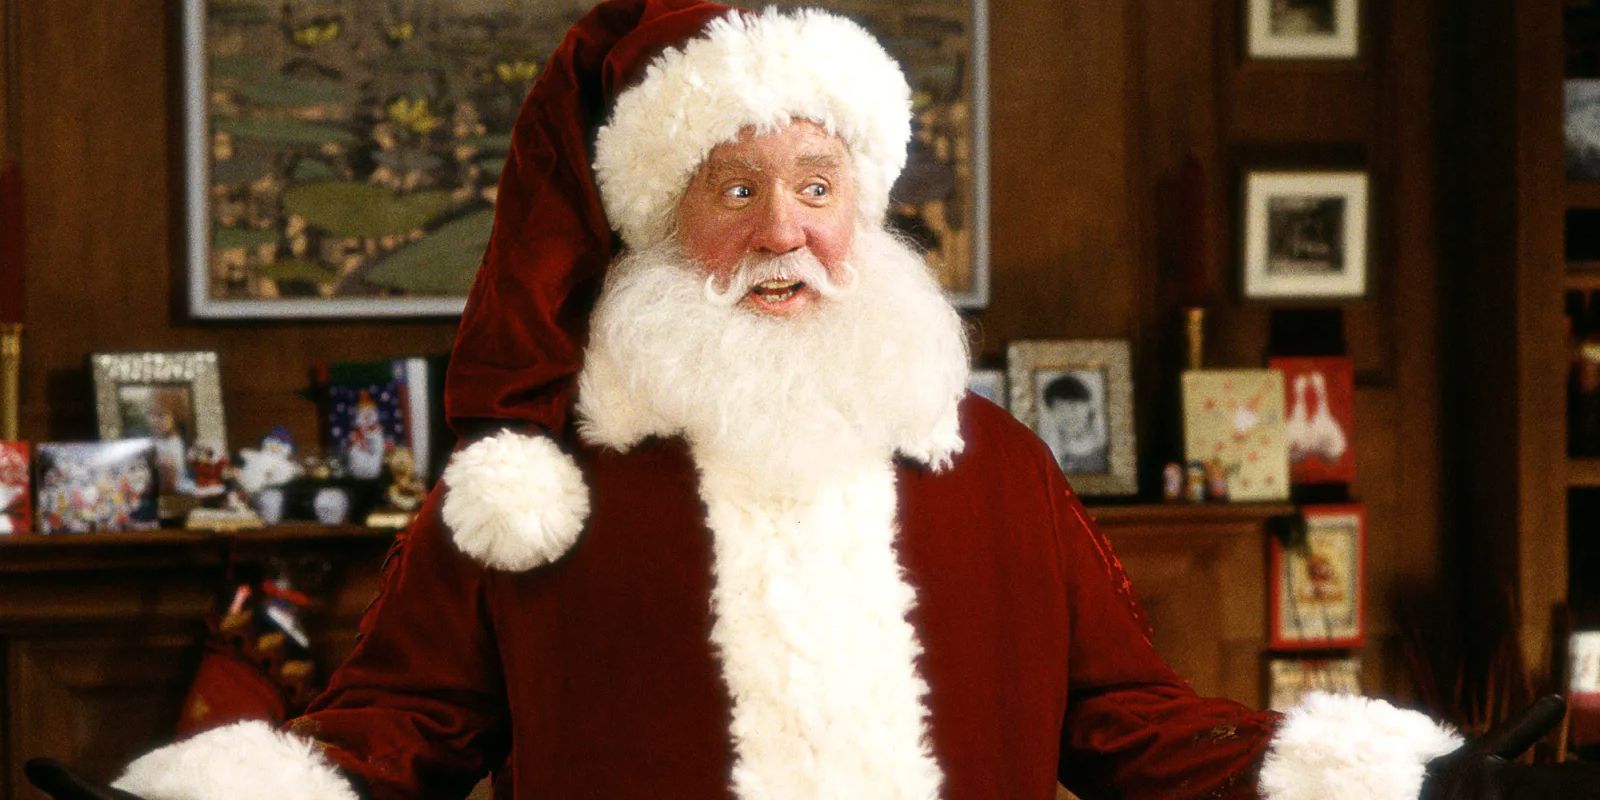 Tim Allen com roupa completa de Papai Noel em The Santa Clause 2.